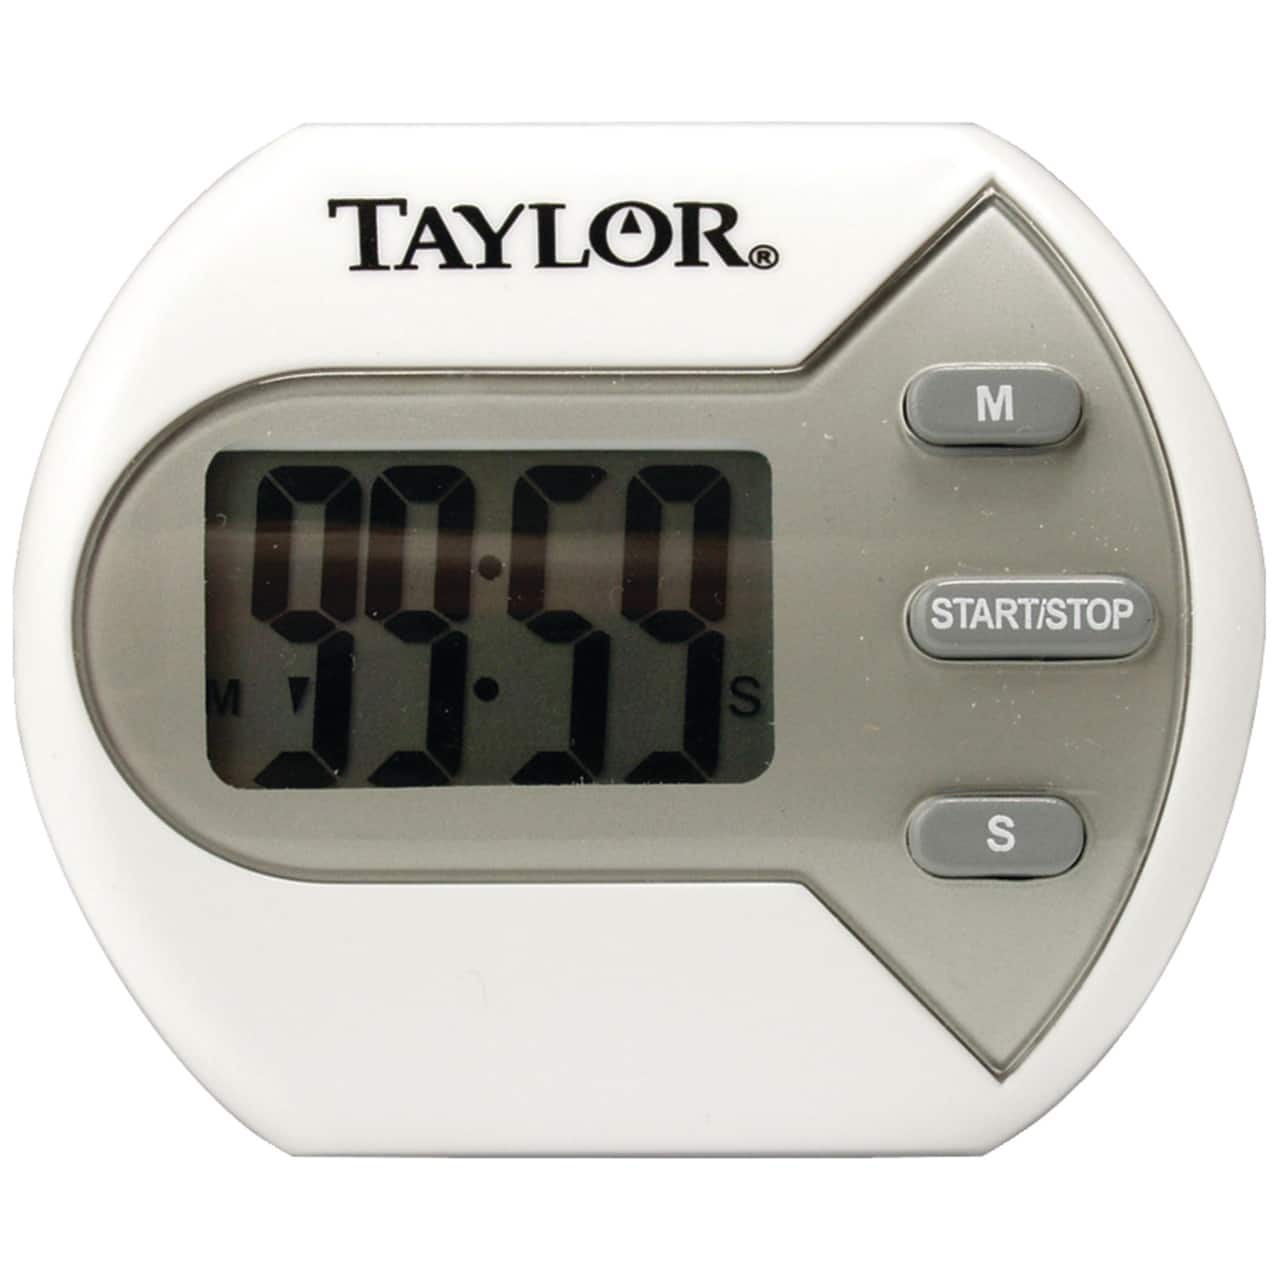 Taylor® White & Gray Digital Timer